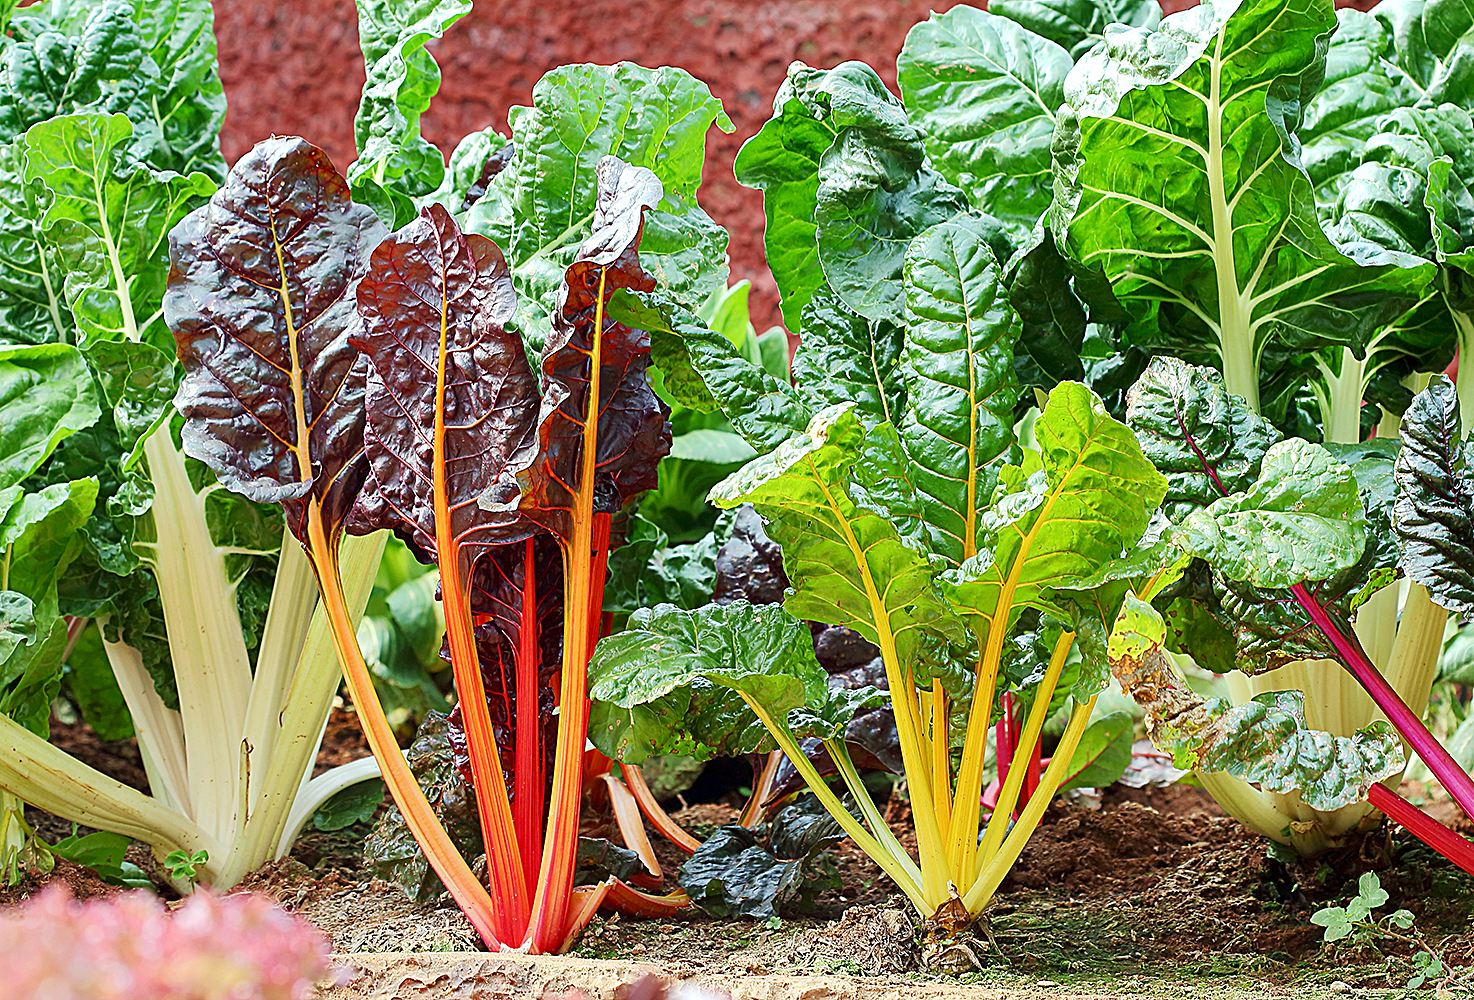 Swiss Chard hydroponics in vegetable garden